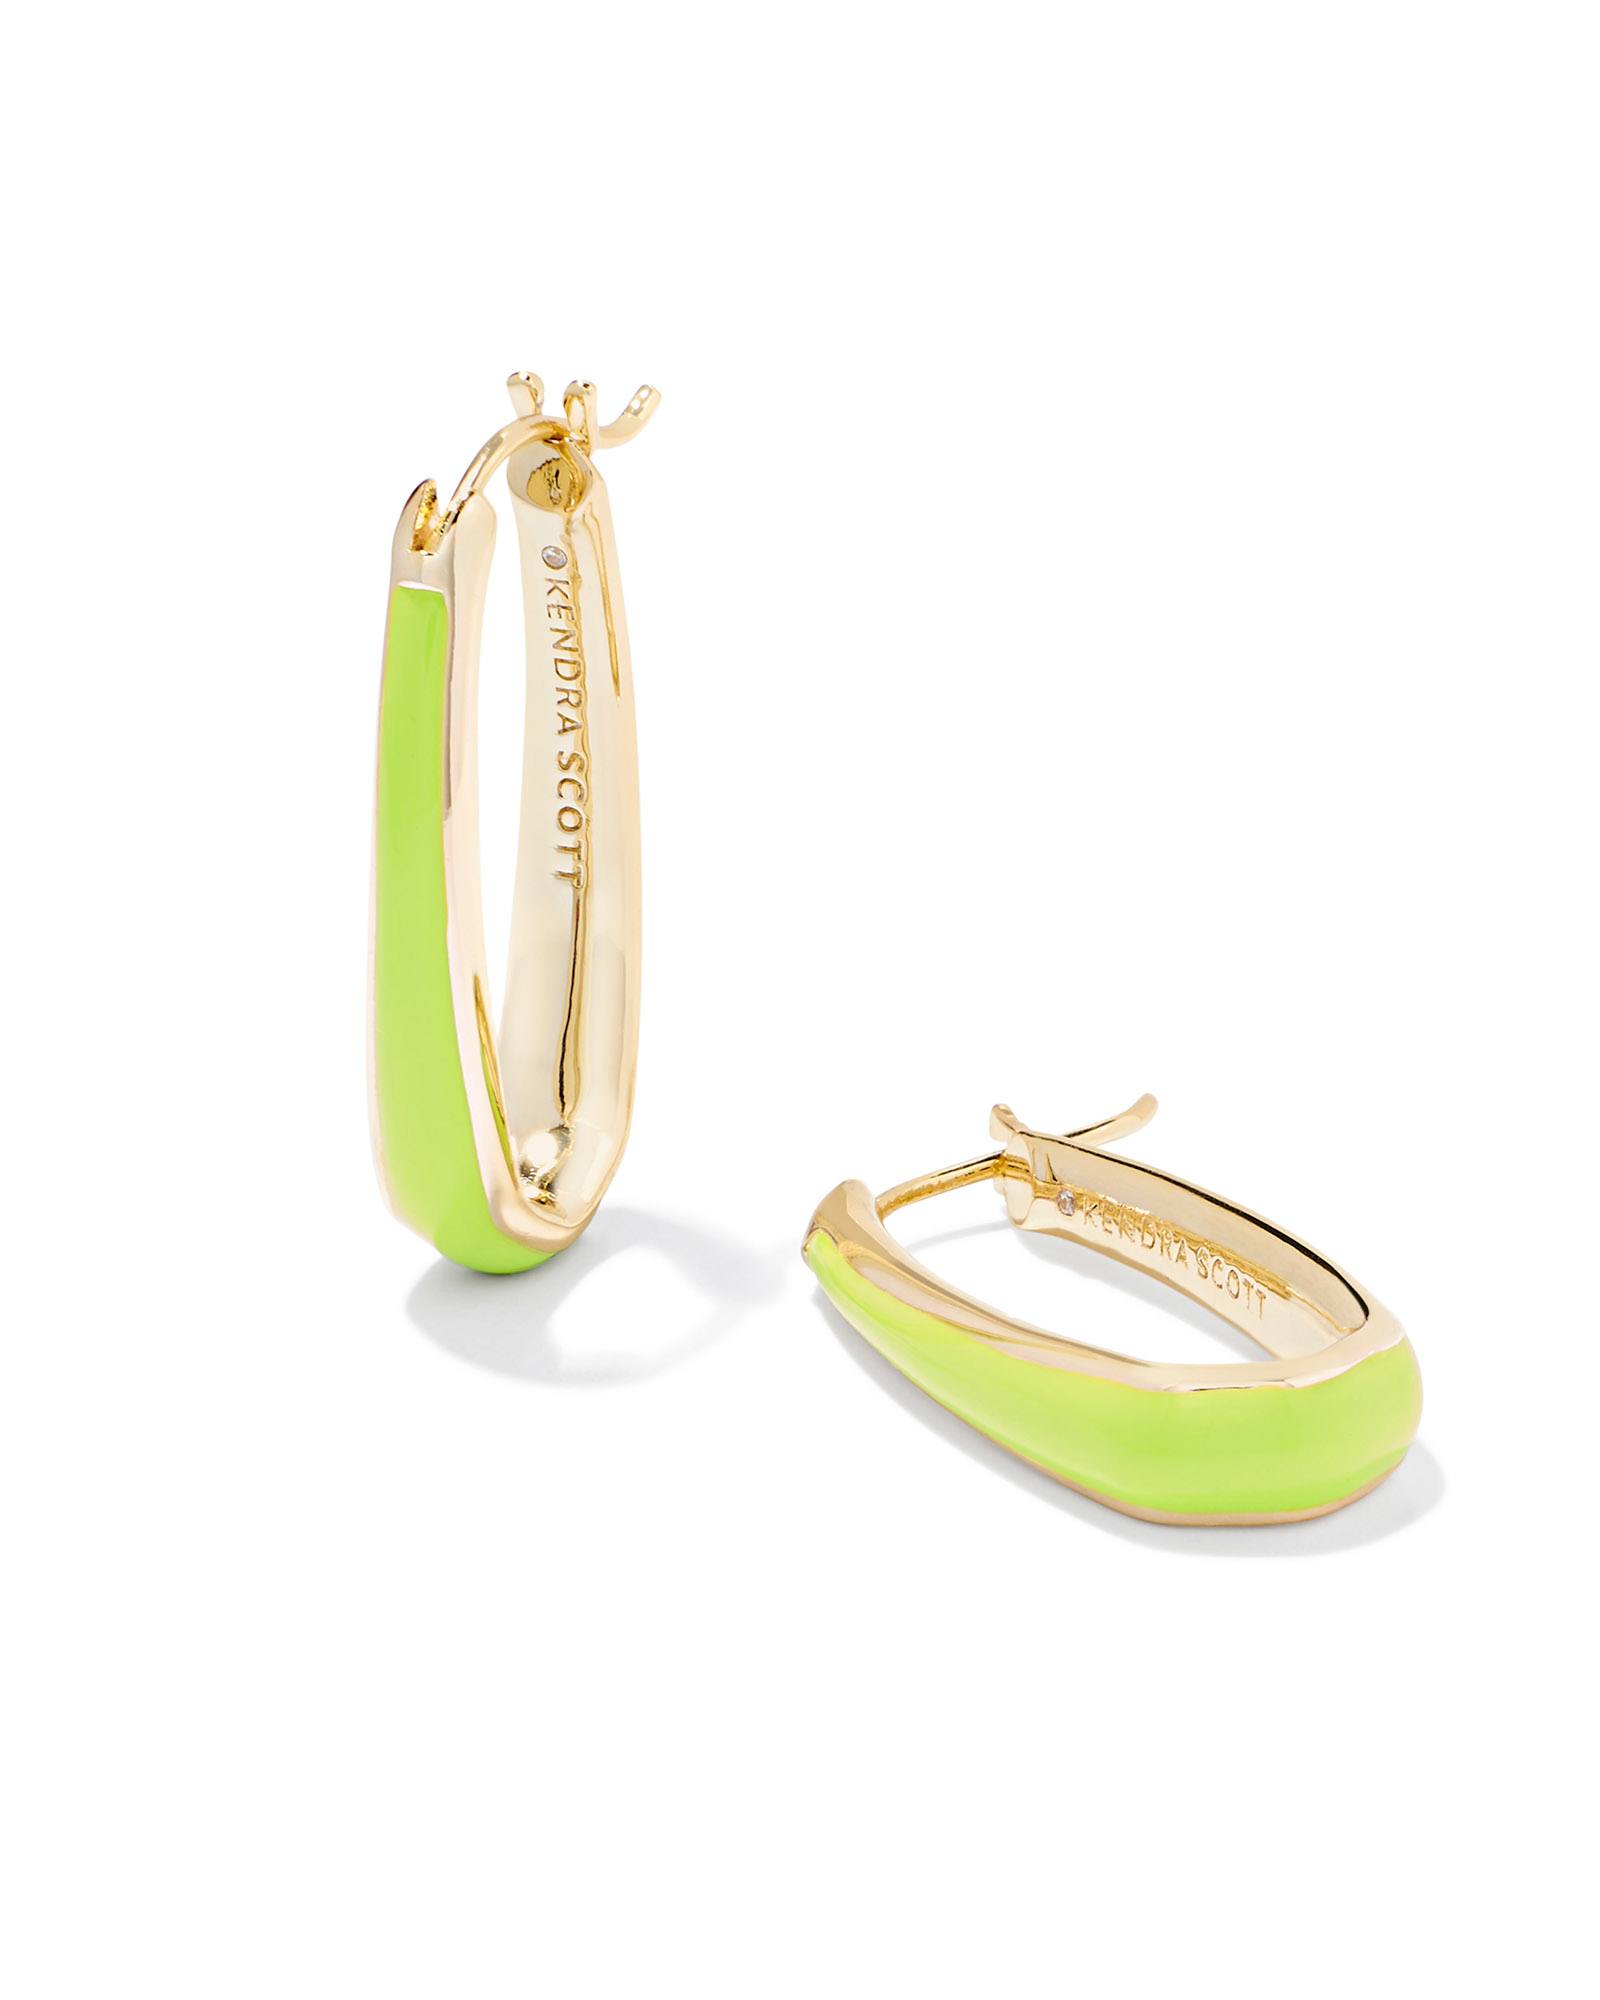 Kelsey Gold Hoop Earrings in Chartreuse Enamel